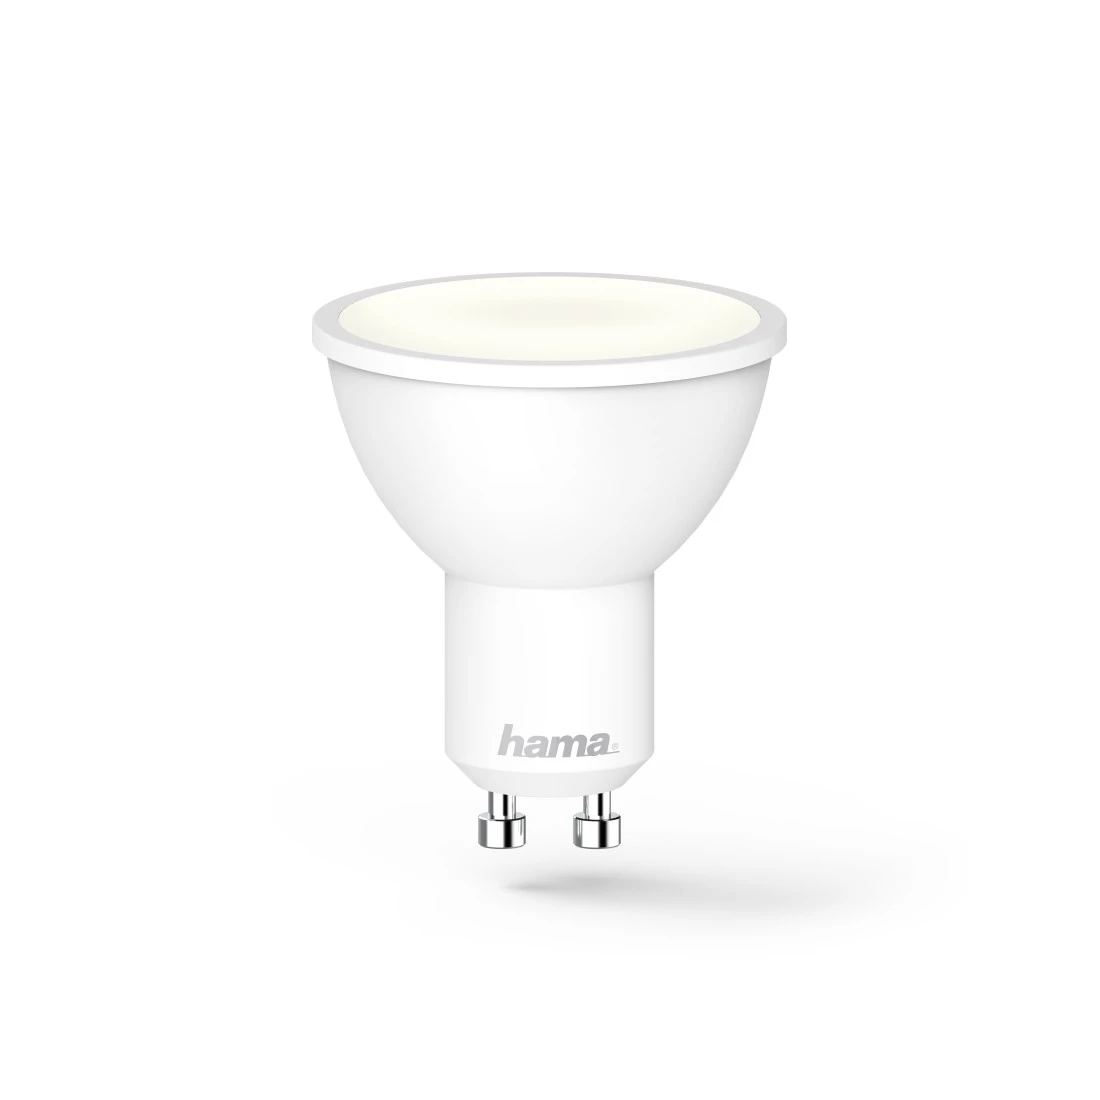 Sprach-/App-Steuerung RGBW, Refl., GU10, Hama für dimmbar, 5,5W, | WLAN-LED-Lampe,